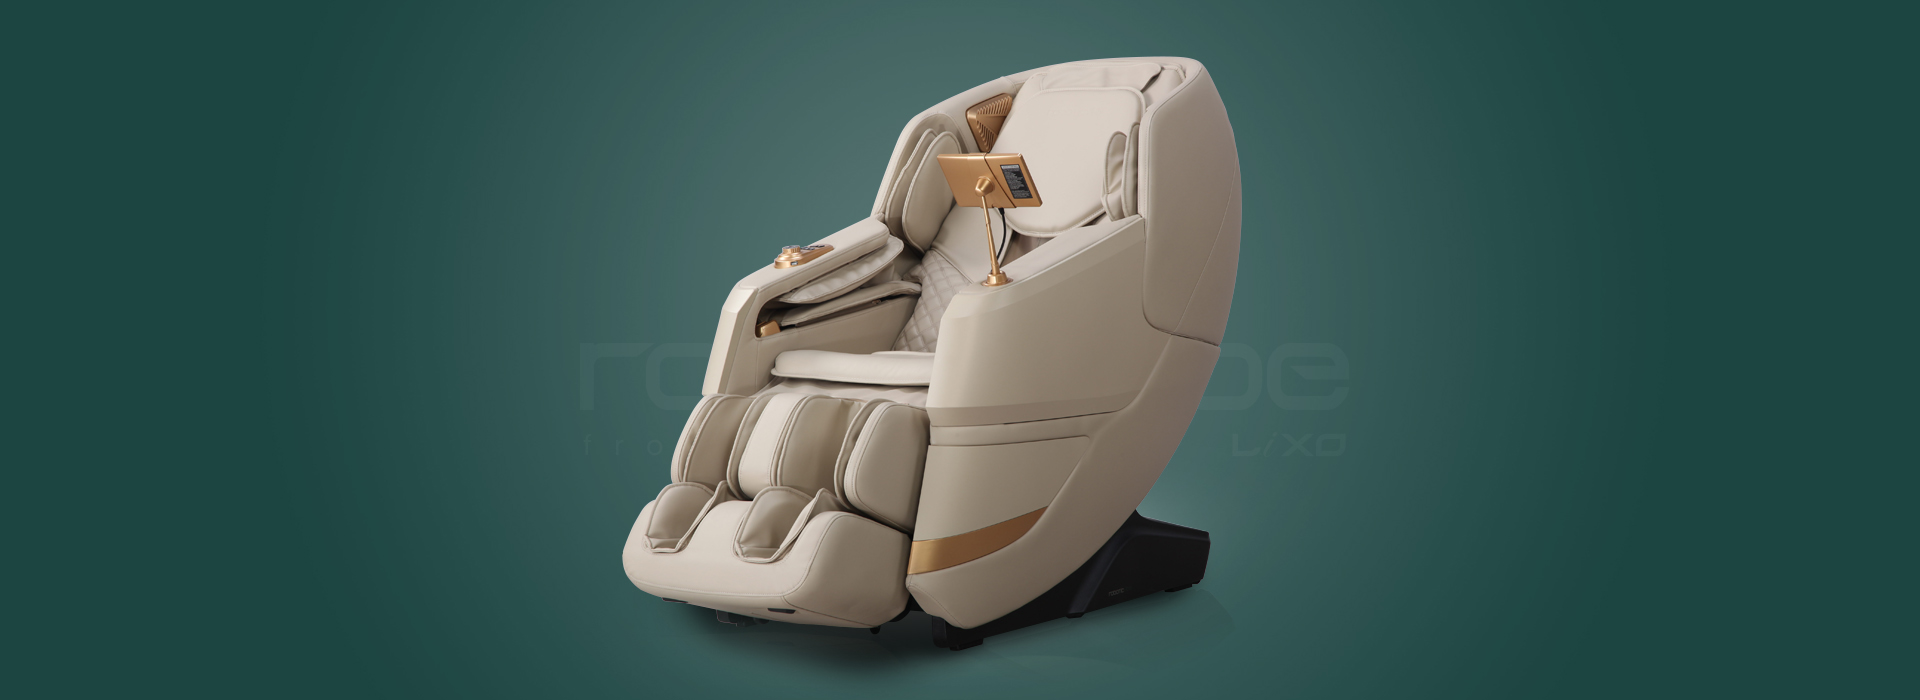 Automatic Luxury Massage Chair